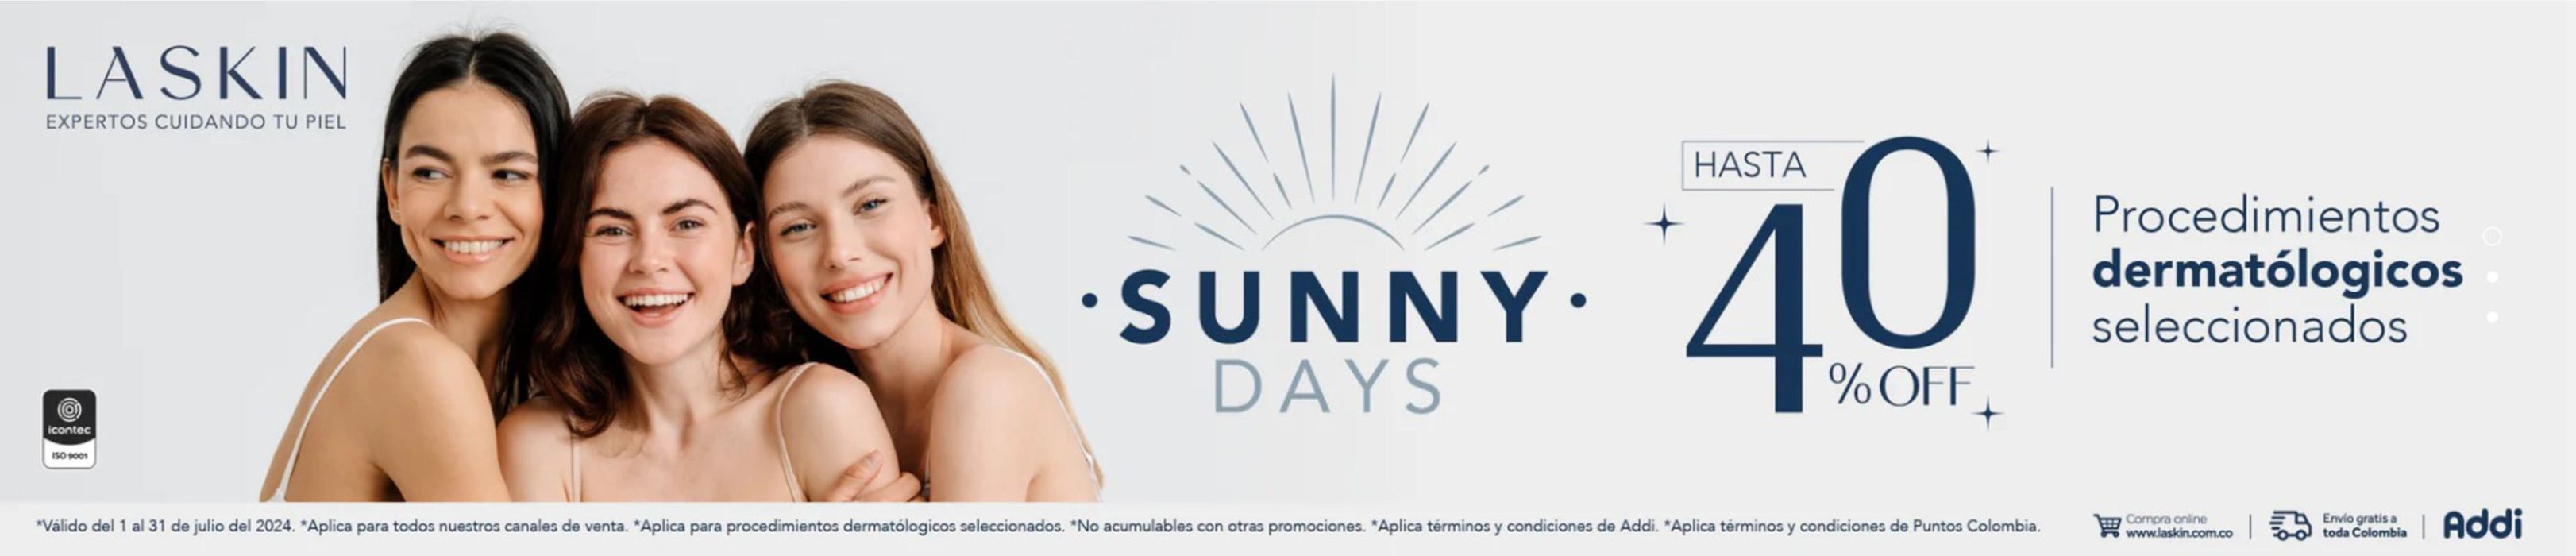 Catálogo Laskin | Sunny days hasta 40% off | 25/7/2024 - 31/7/2024